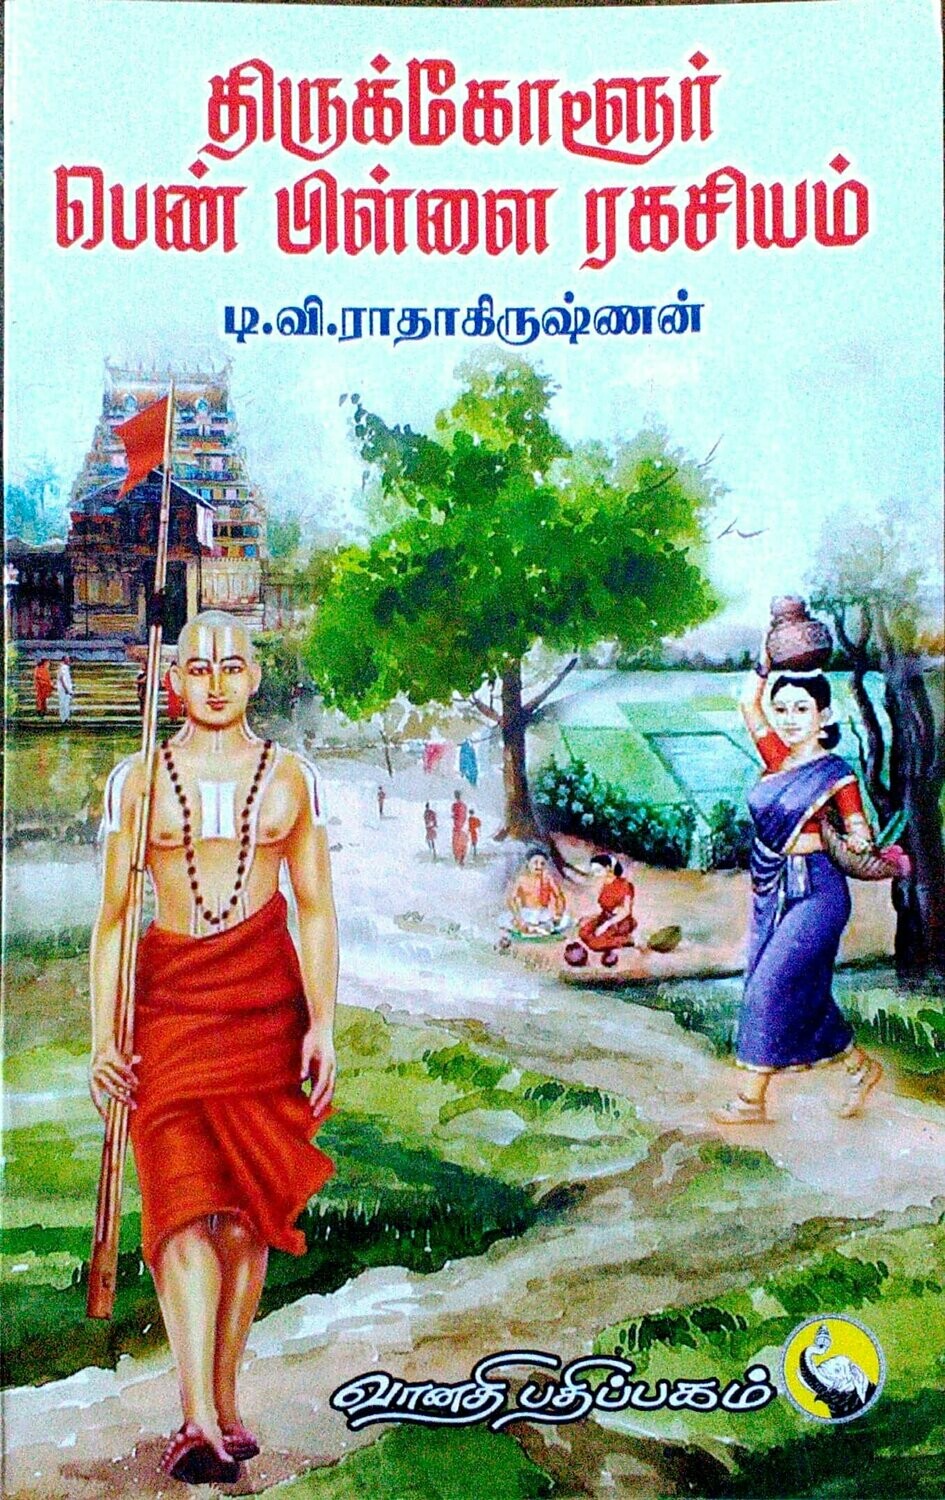 Printed Book - Thirukkolur Penn Pillai Rahasyam - திருக்கோளூர் பெண் பிள்ளை ரஹஸ்யம்